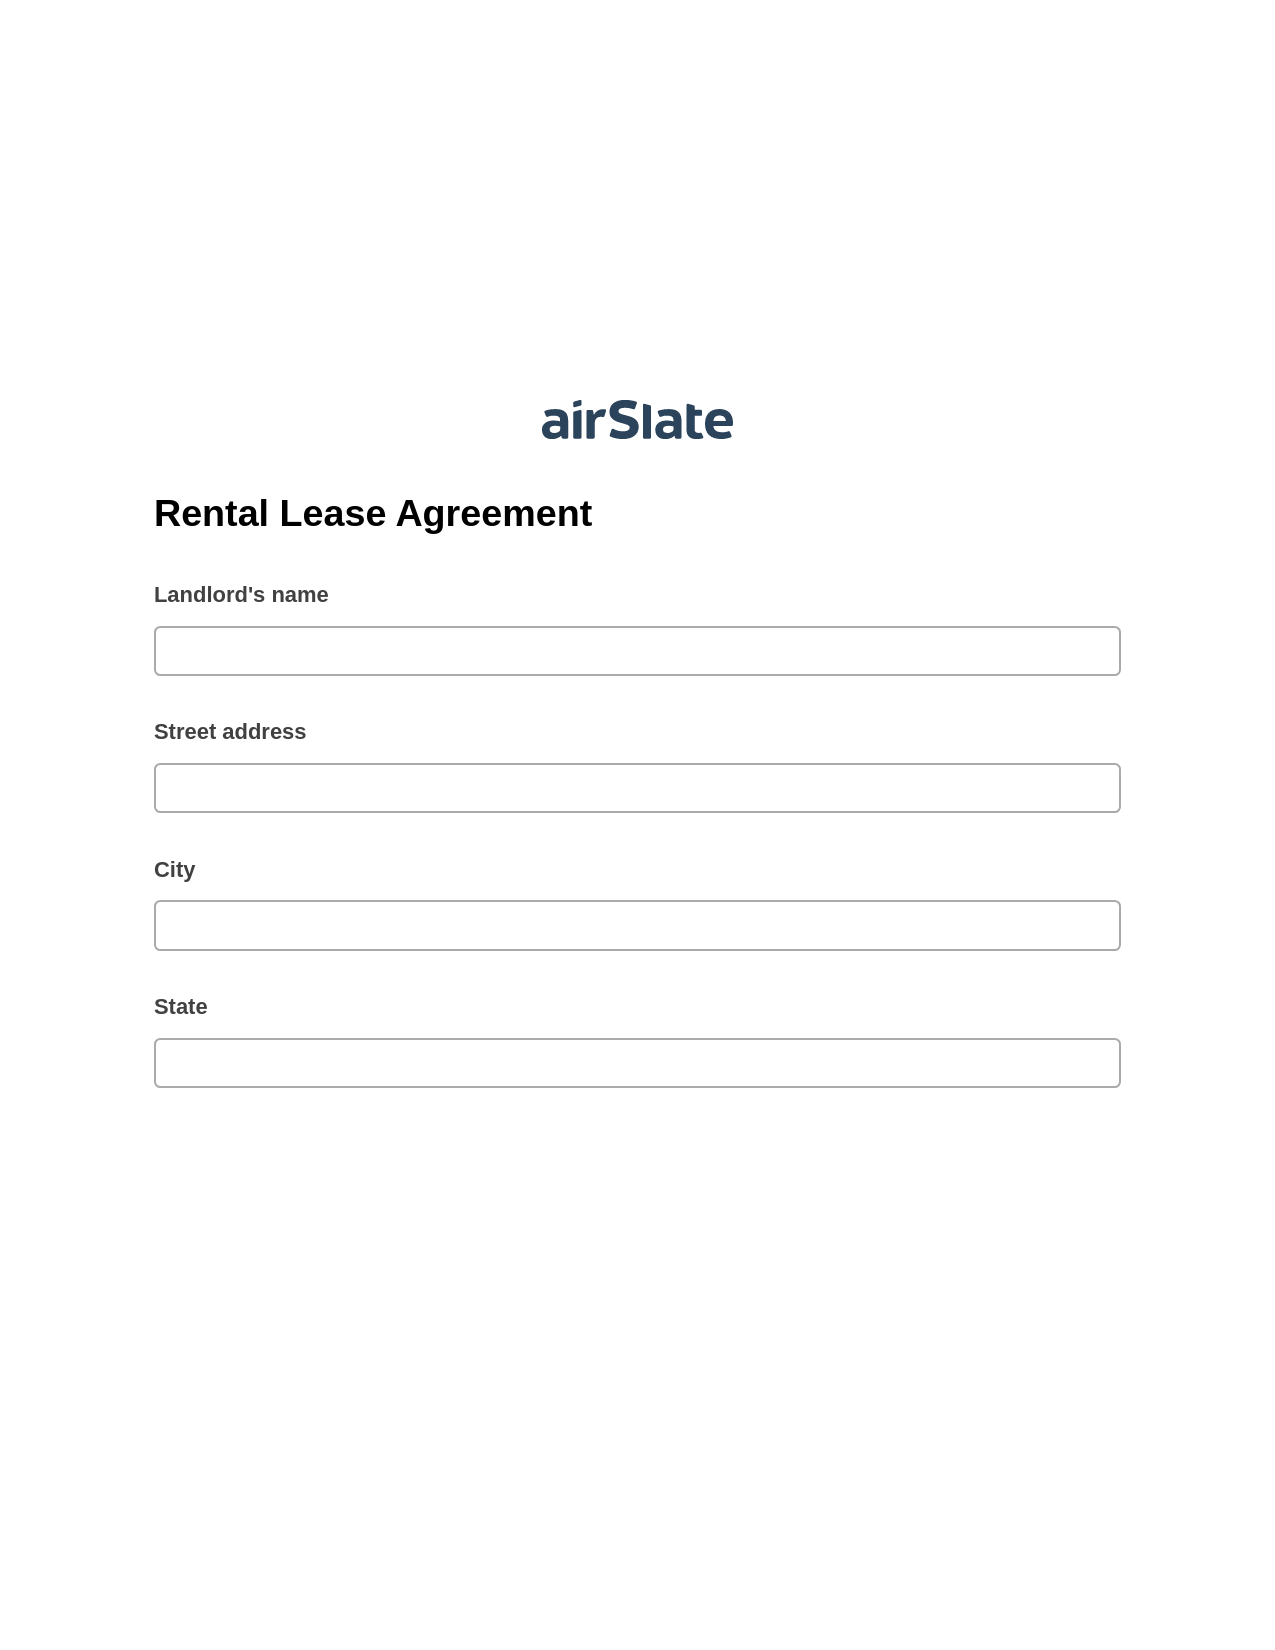 Rental Lease Agreement Pre-fill from MySQL Dropdown Options Bot, Google Cloud Print Bot, Slack Notification Postfinish Bot